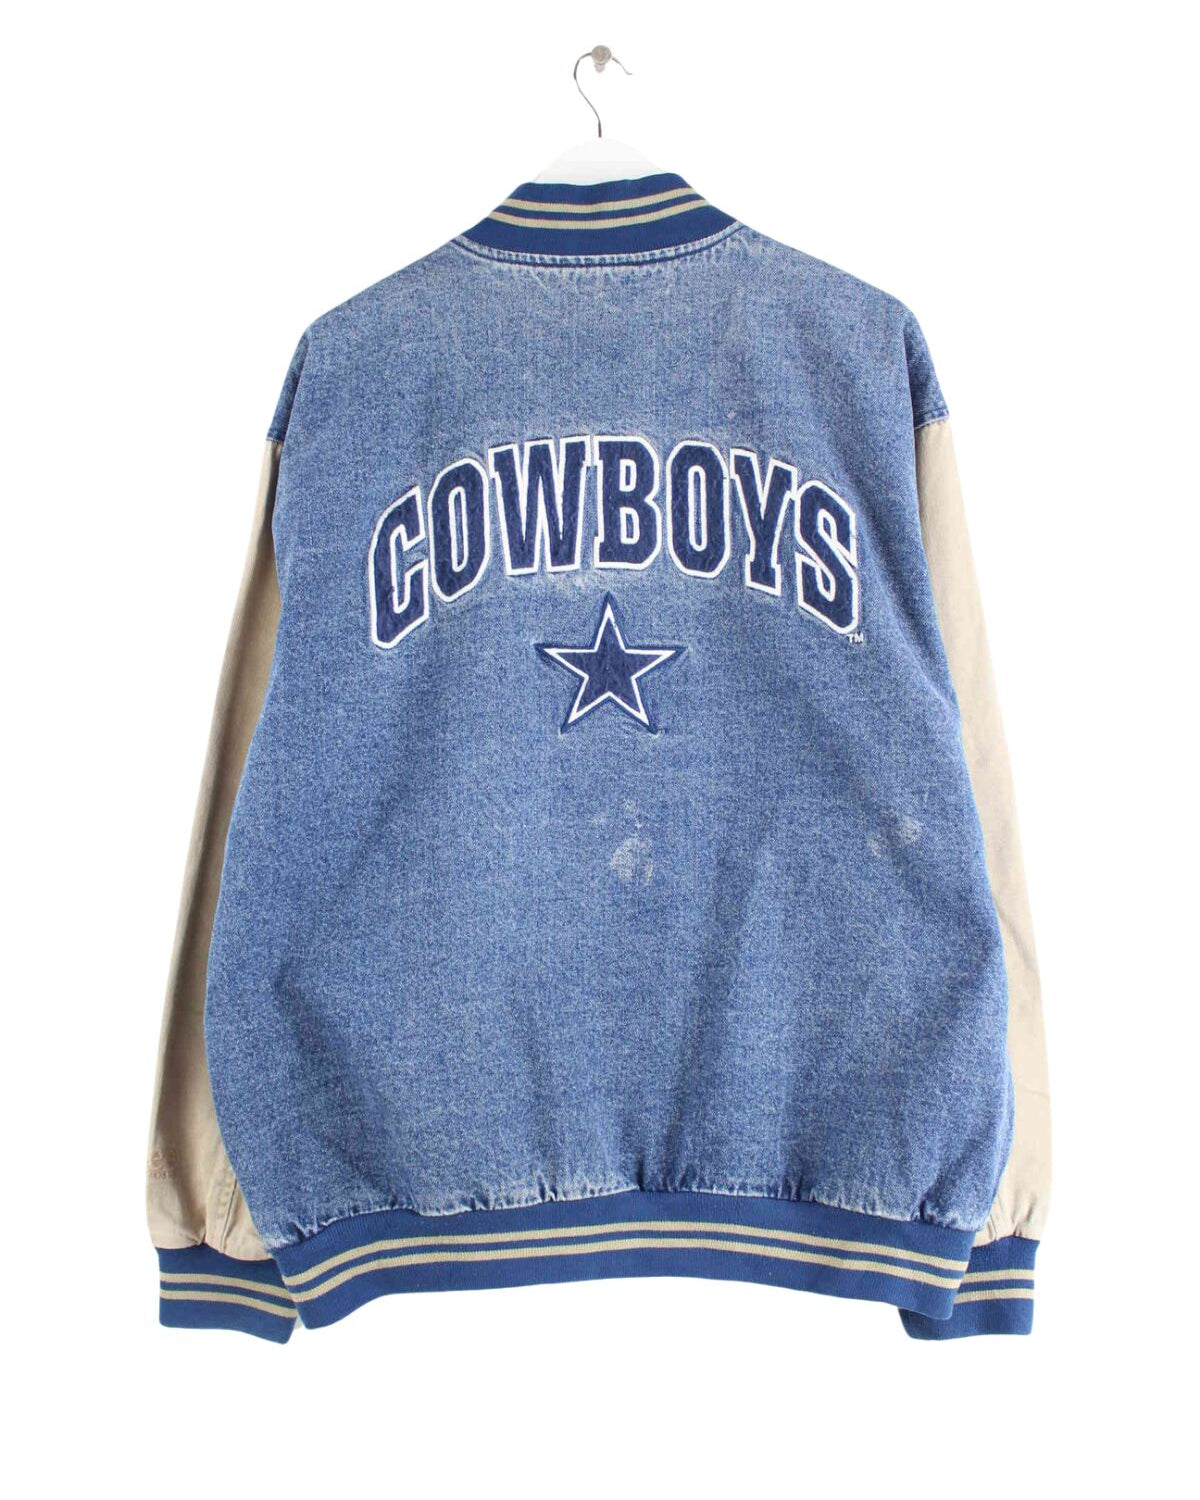 Lee 90s Vintage Dallas Cowboys Denim College Jacke Blau L (back image)